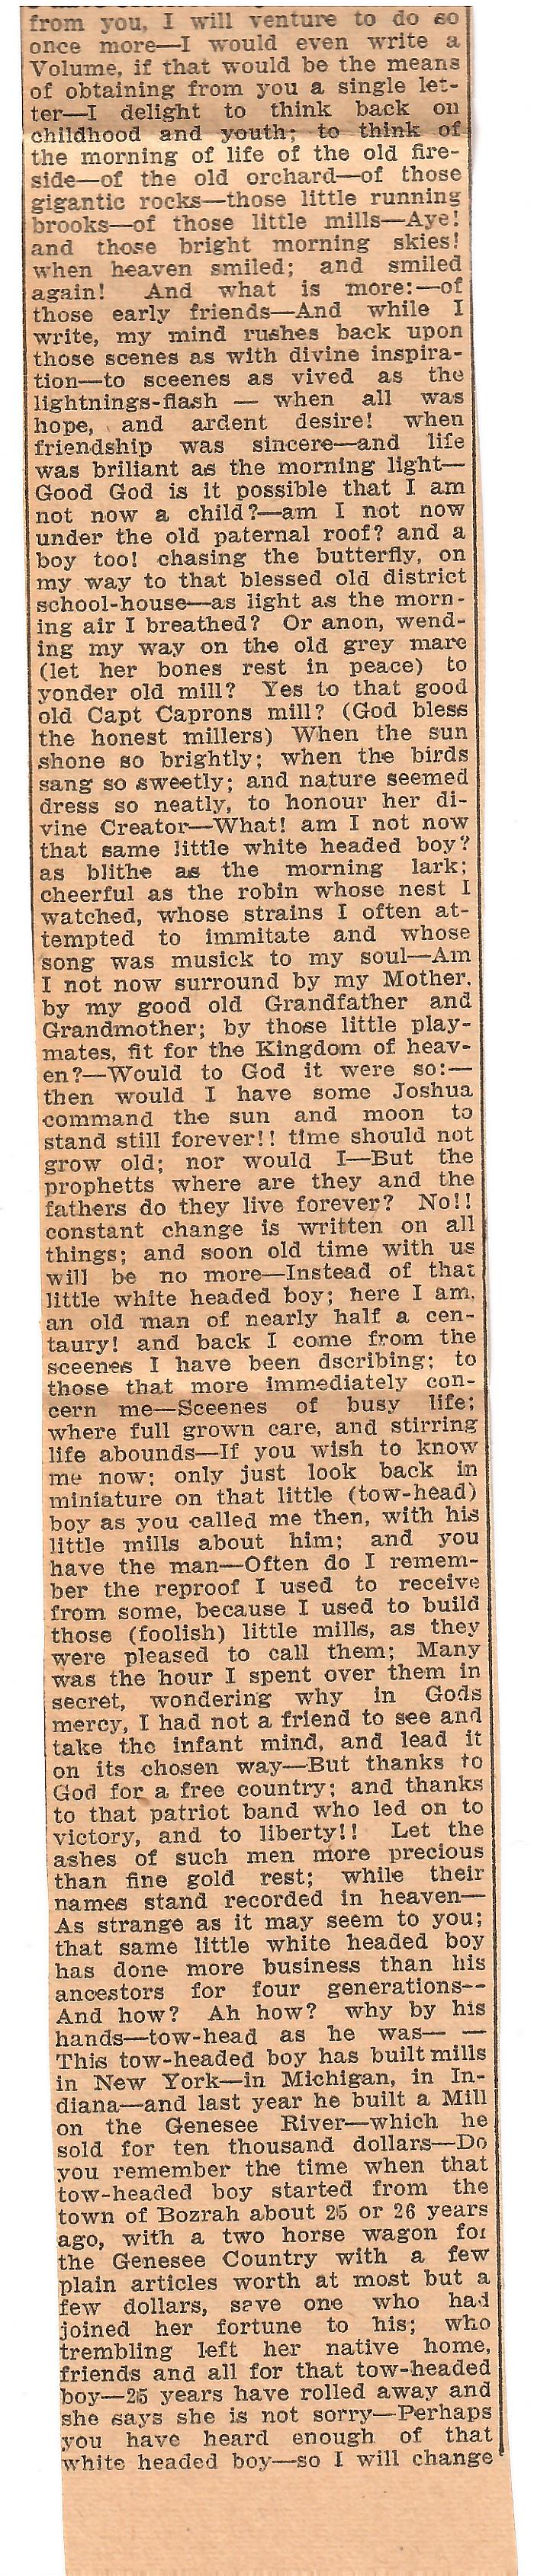 Norwich Bulletin Clipping July 5, 1938